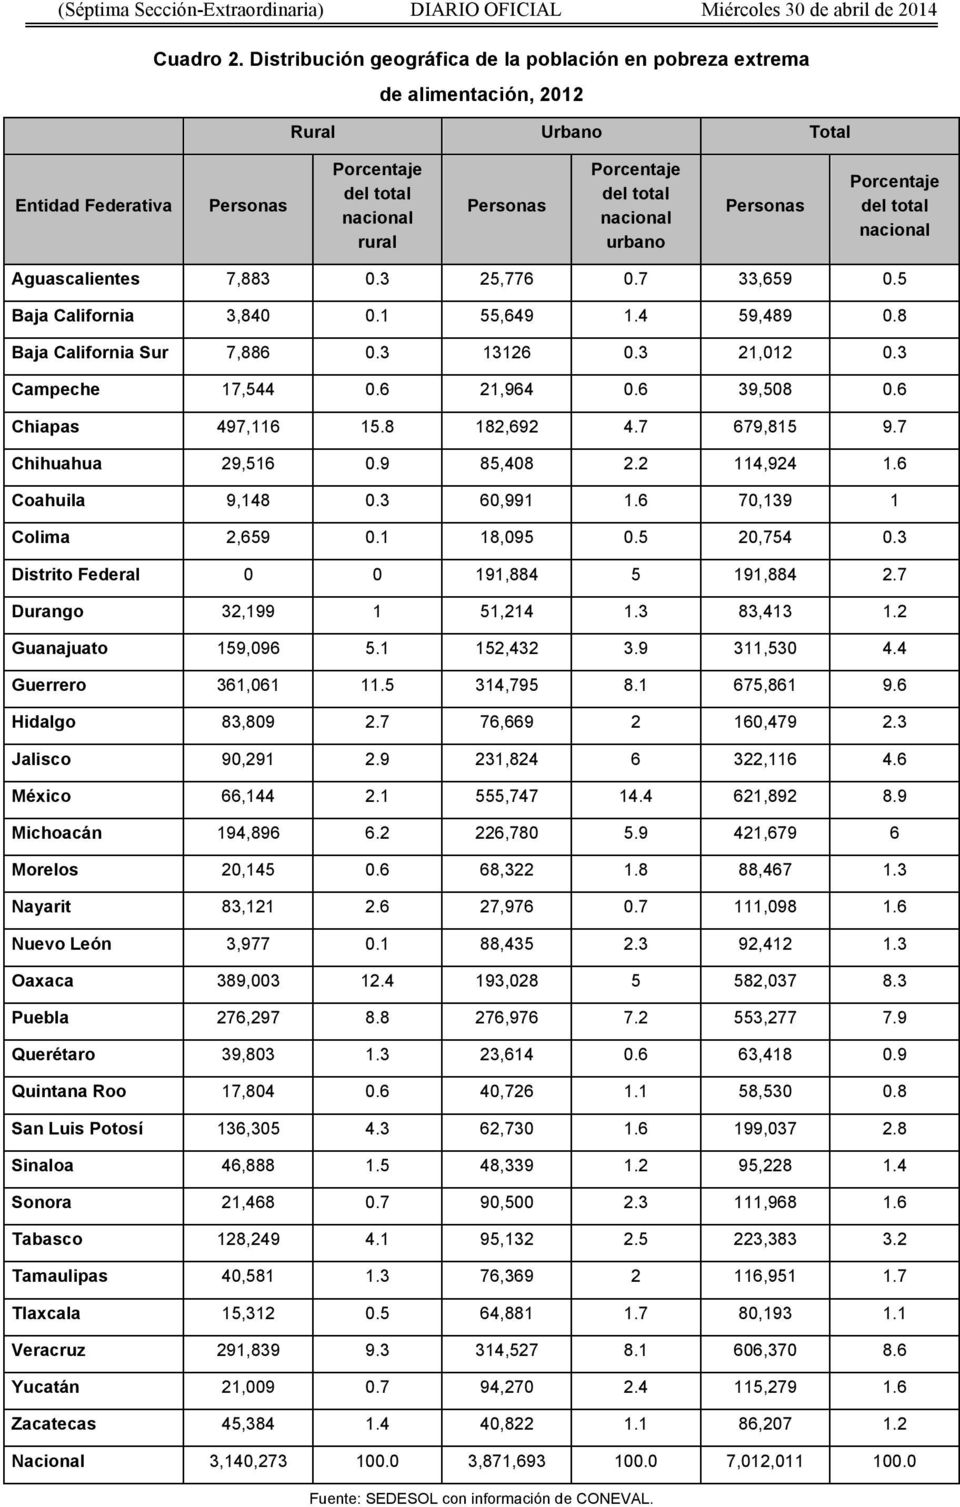 nacional urbano Personas Porcentaje del total nacional Aguascalientes 7,883 0.3 25,776 0.7 33,659 0.5 Baja California 3,840 0.1 55,649 1.4 59,489 0.8 Baja California Sur 7,886 0.3 13126 0.3 21,012 0.